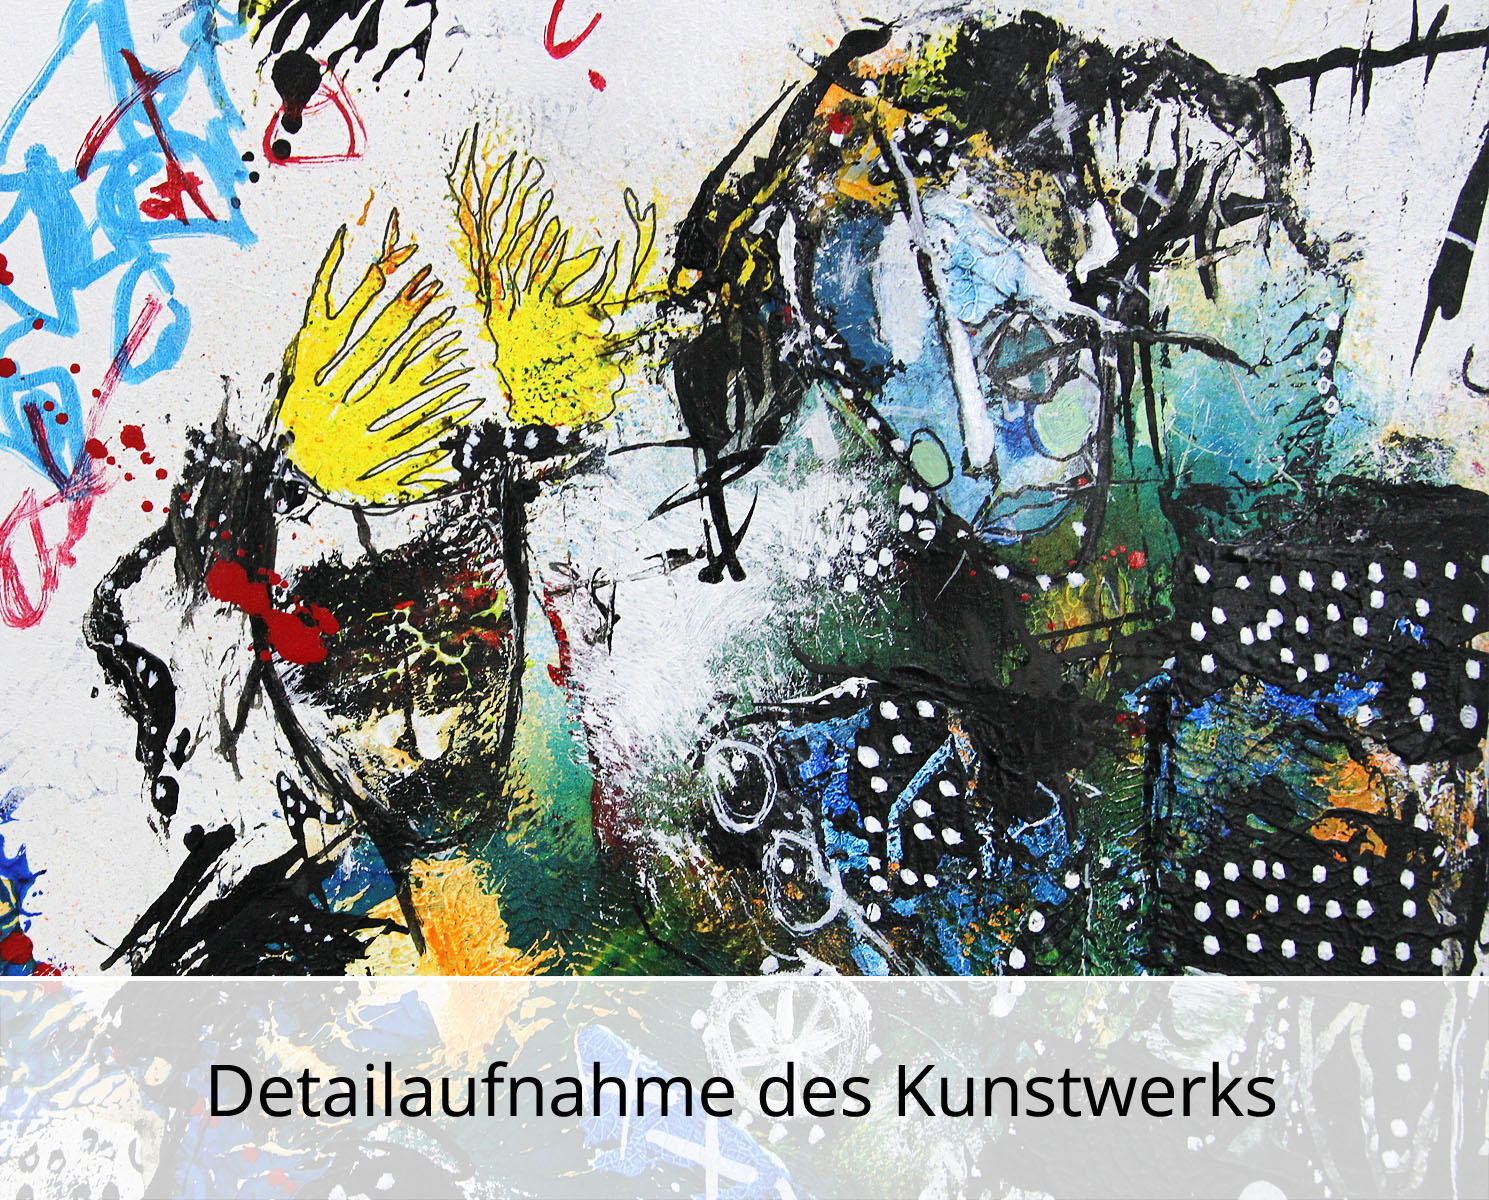 I. Schmidt: "Streetwarrior II", zeitgenössische Grafik/Malerei, Original/Unikat